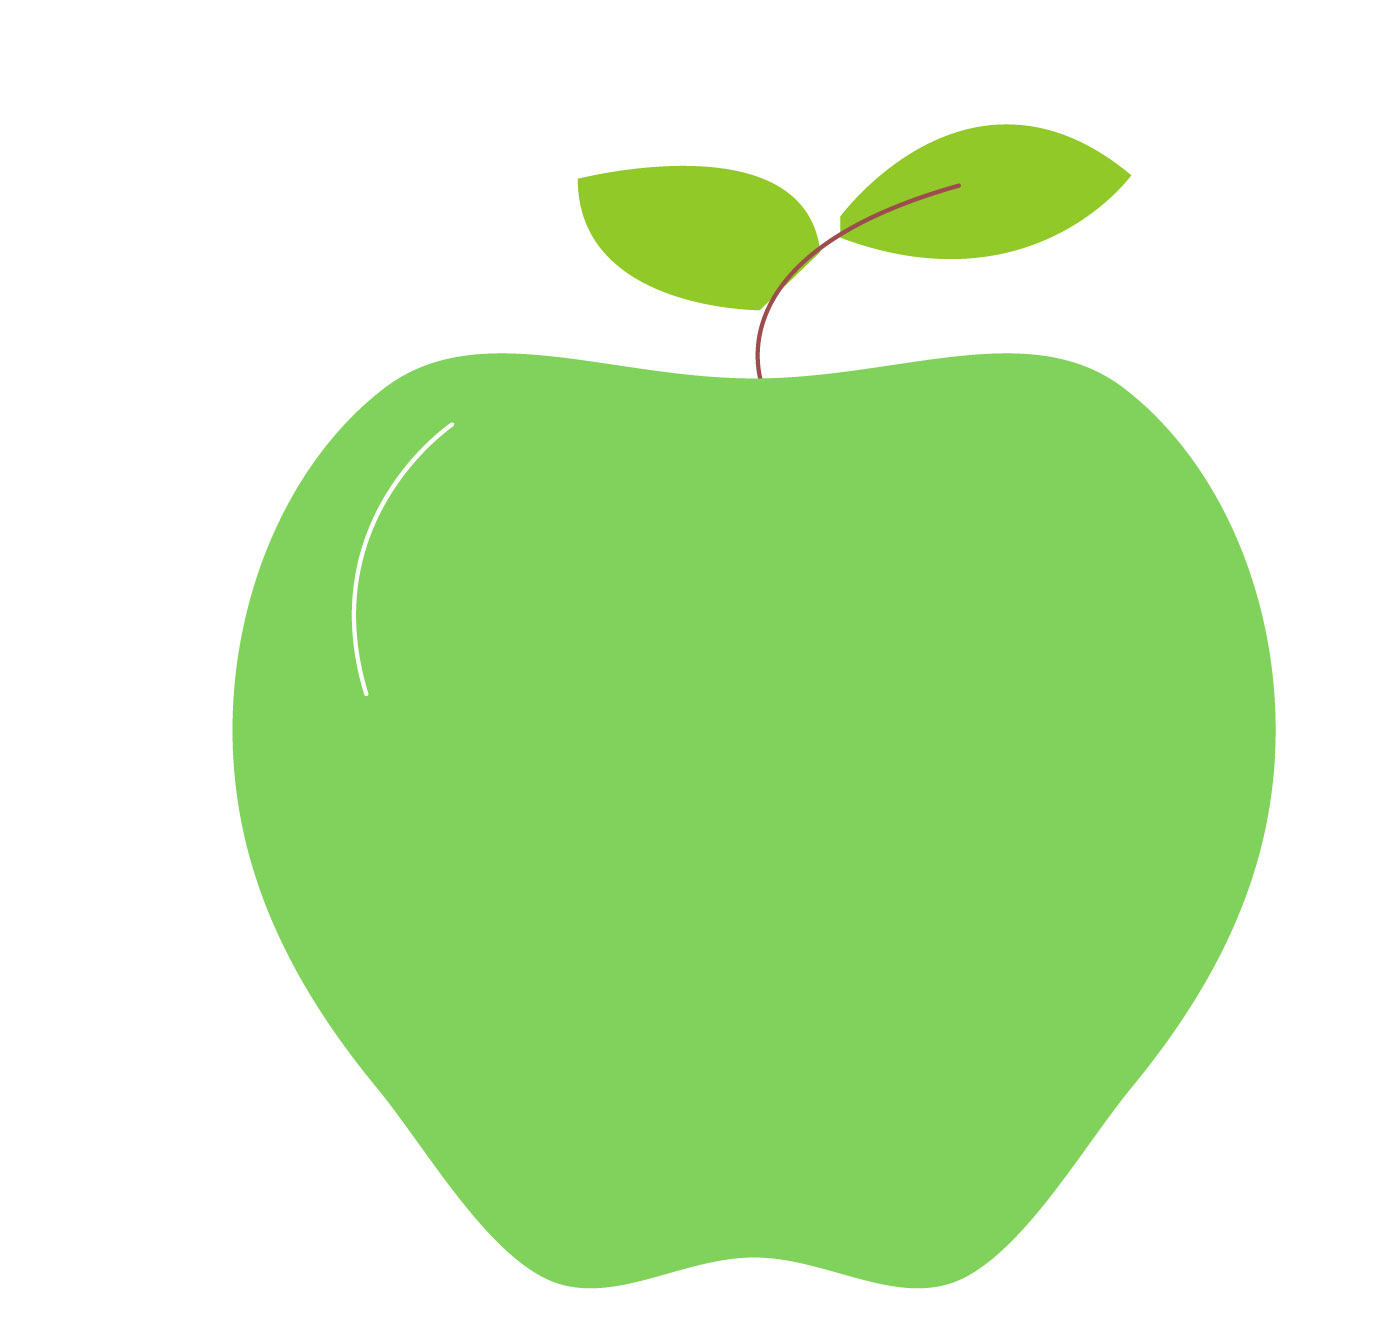 Green apple icon vector